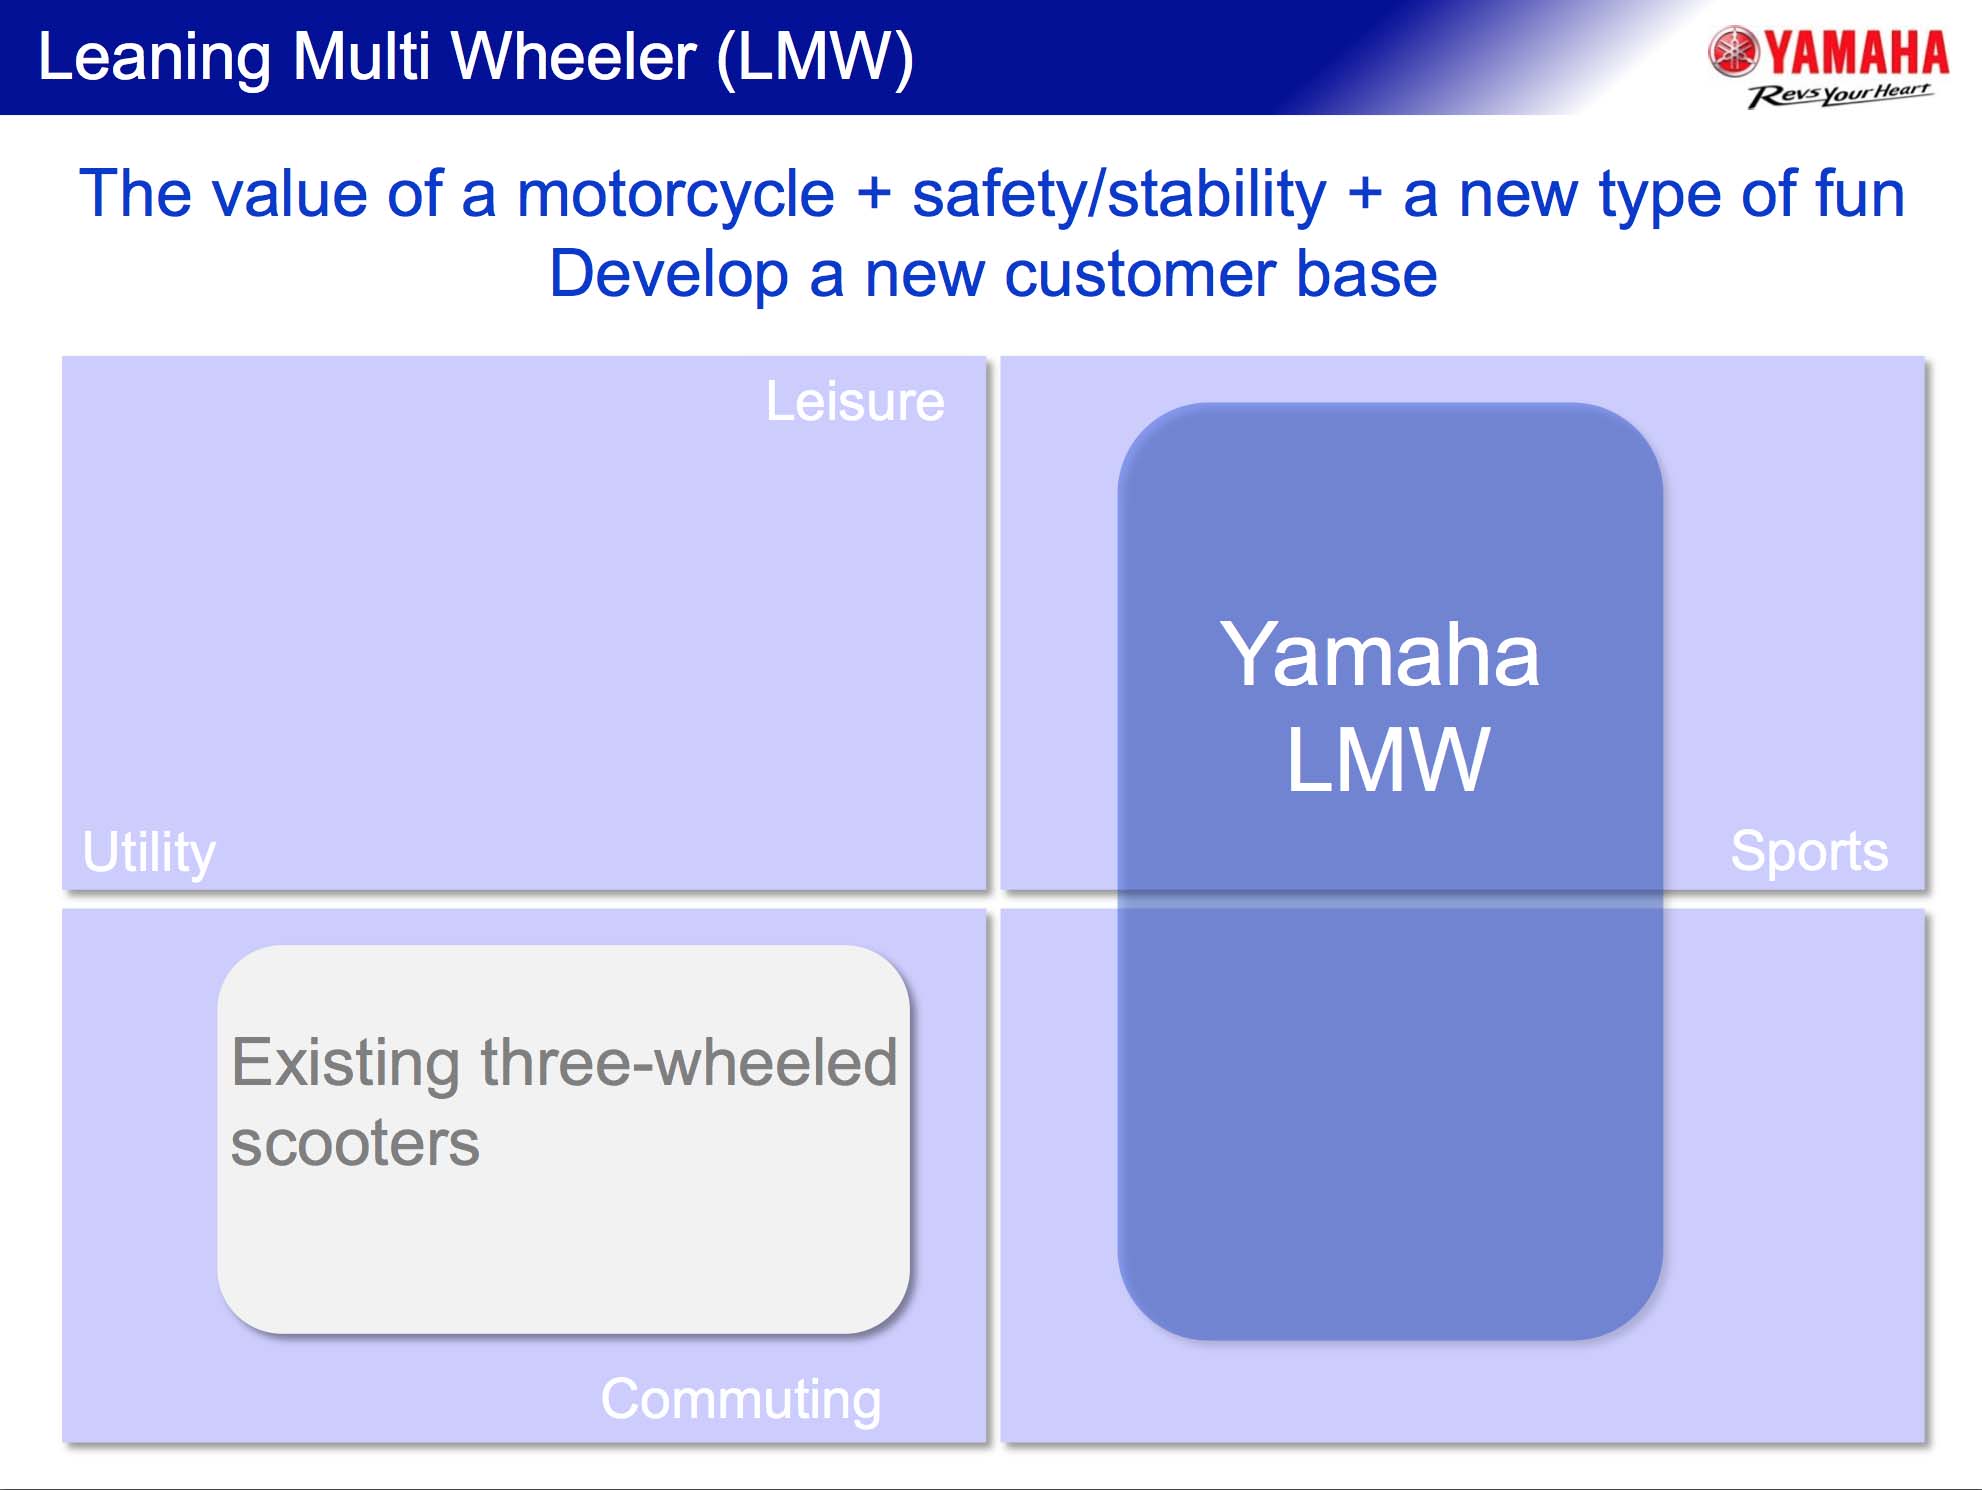 Yamaha-LMW-Leaning-Multi-Wheeler-presentation-01